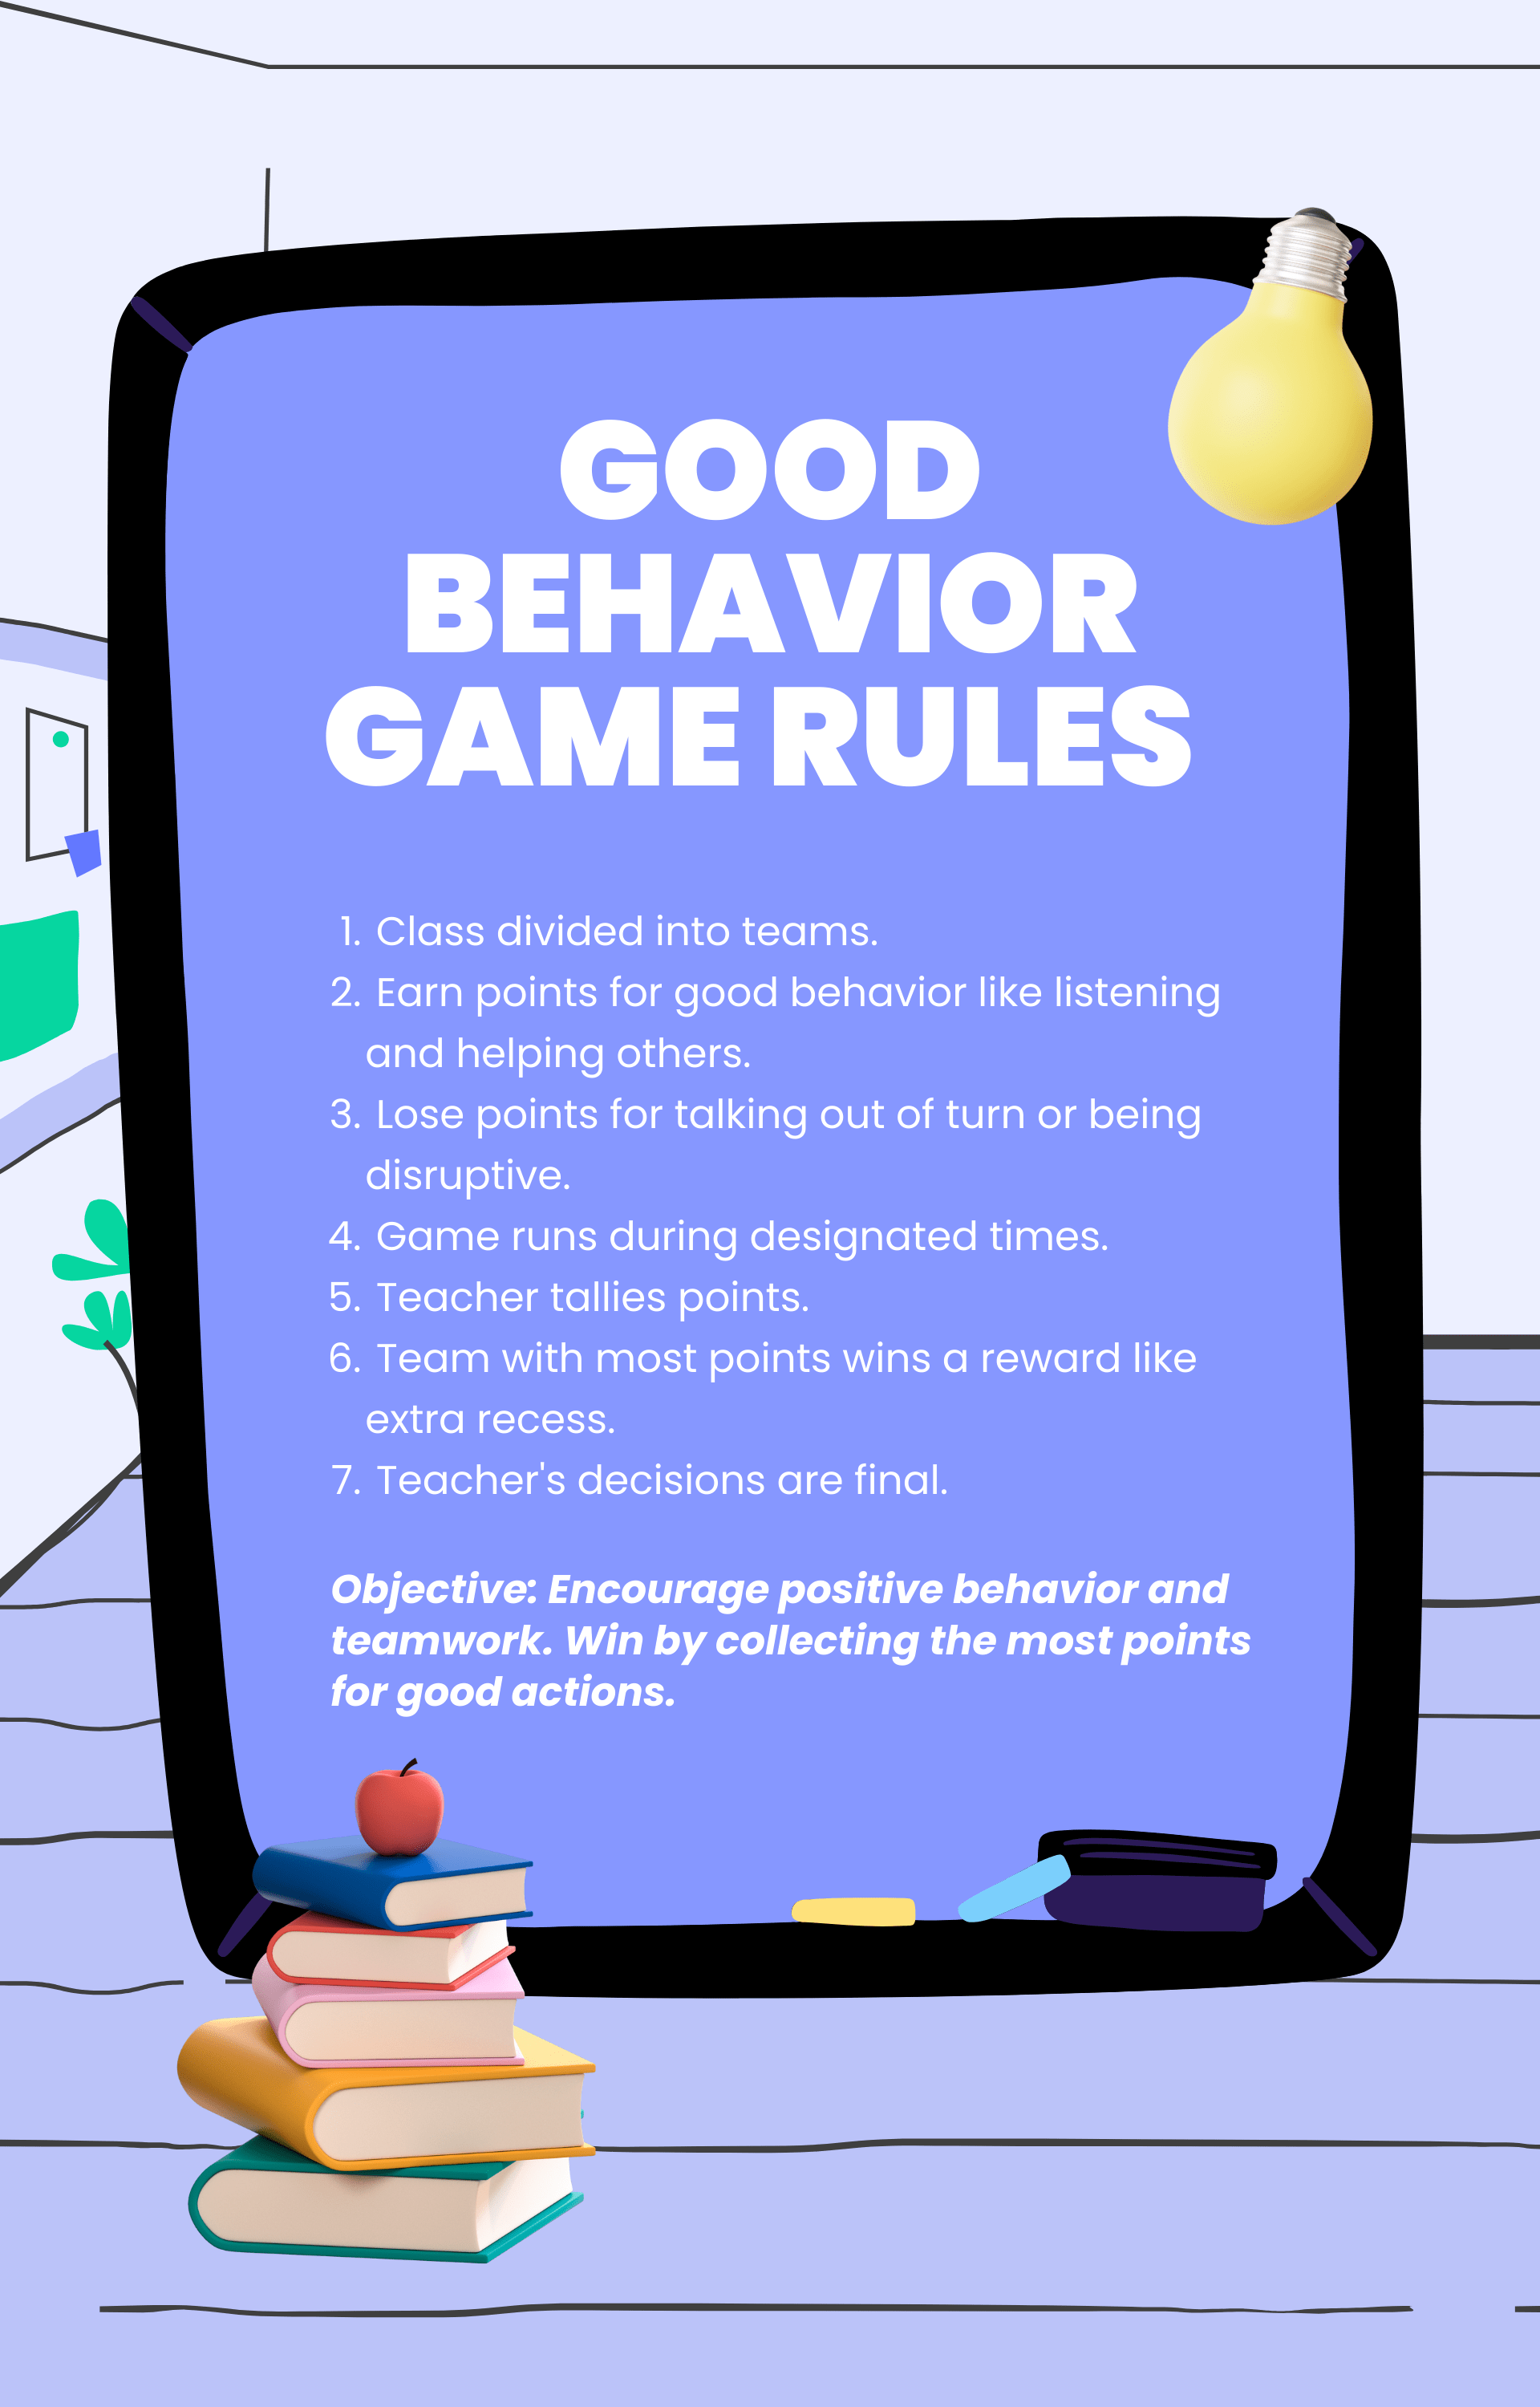 Aturan permainan perilaku yang baik